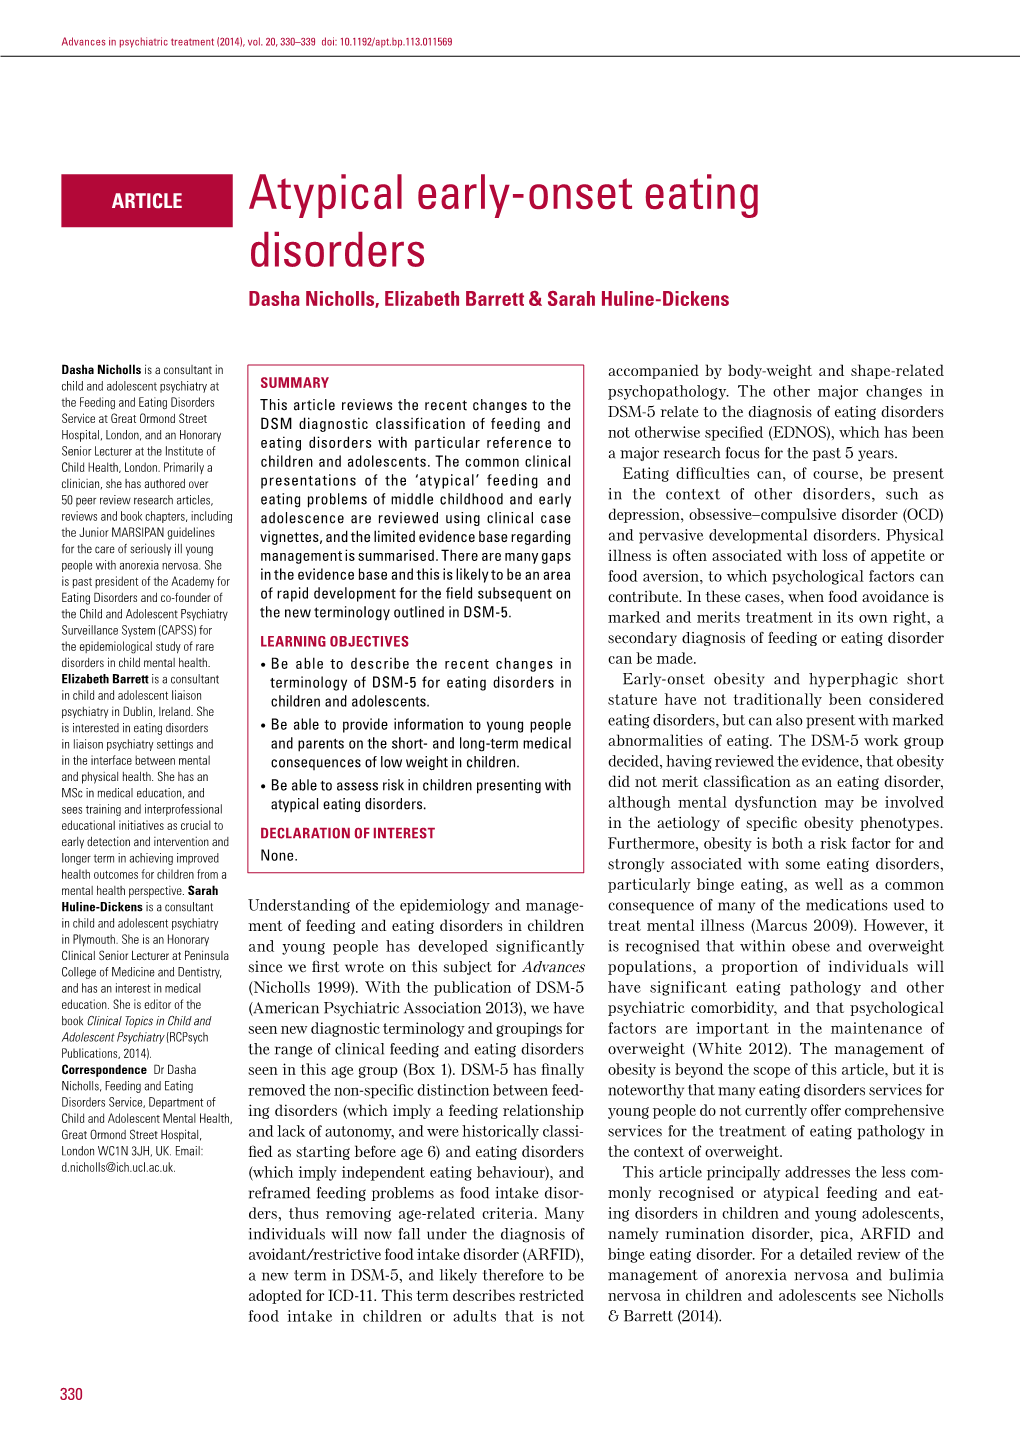 Atypical Early-Onset Eating Disorders Dasha Nicholls, Elizabeth Barrett & Sarah Huline-Dickens